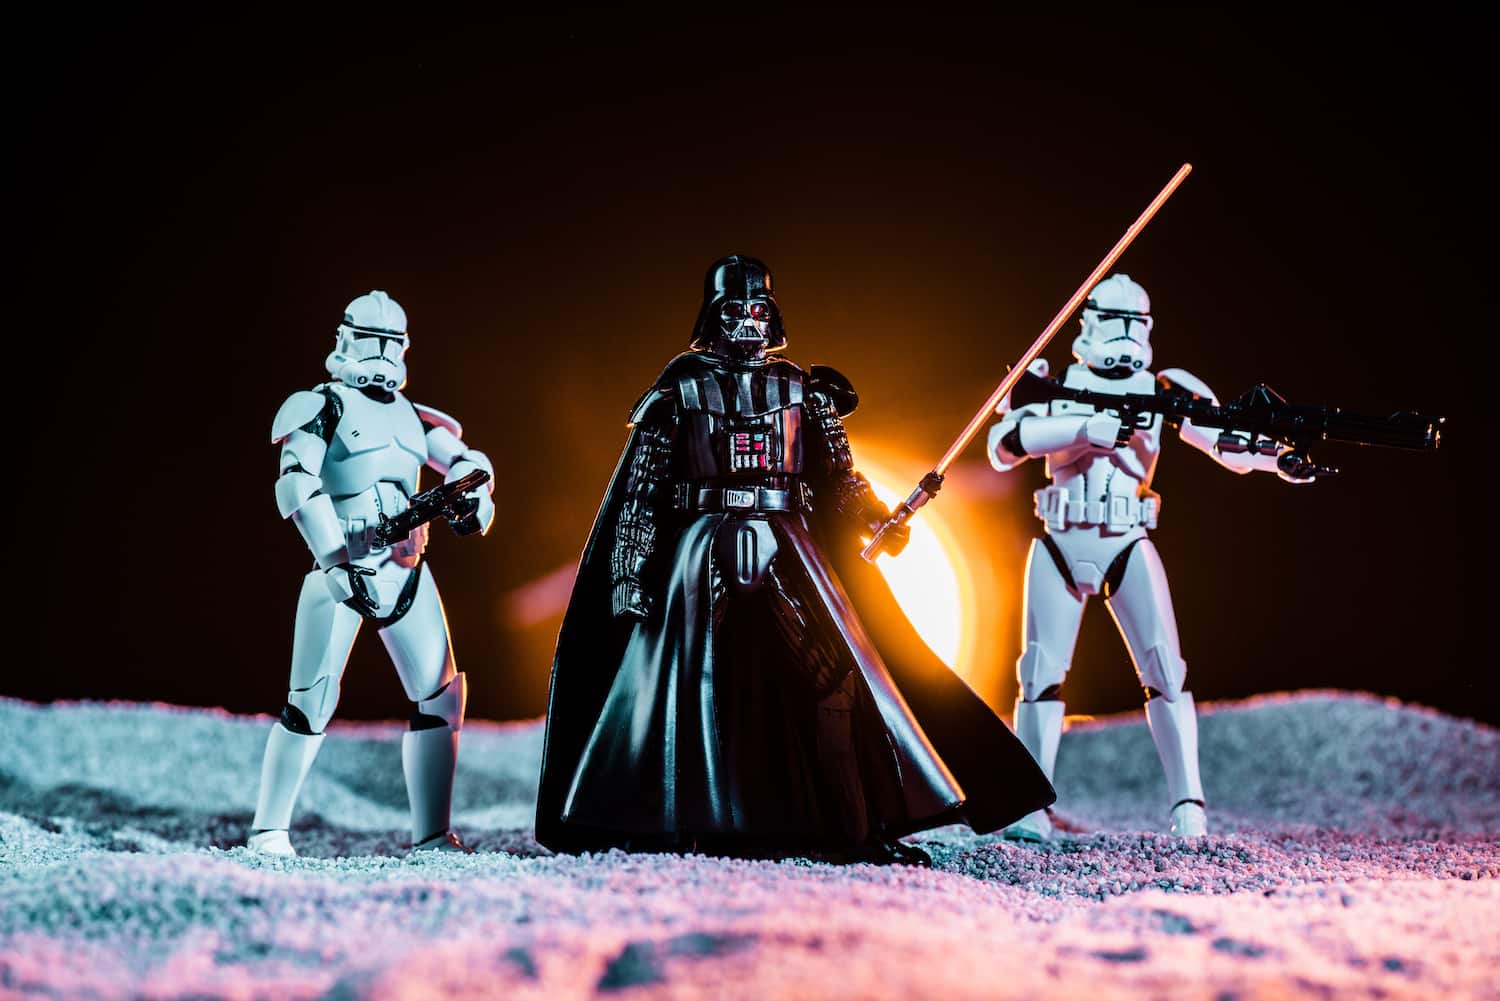 star wars deposit photos - Darth Vader and 2 stormtroopers